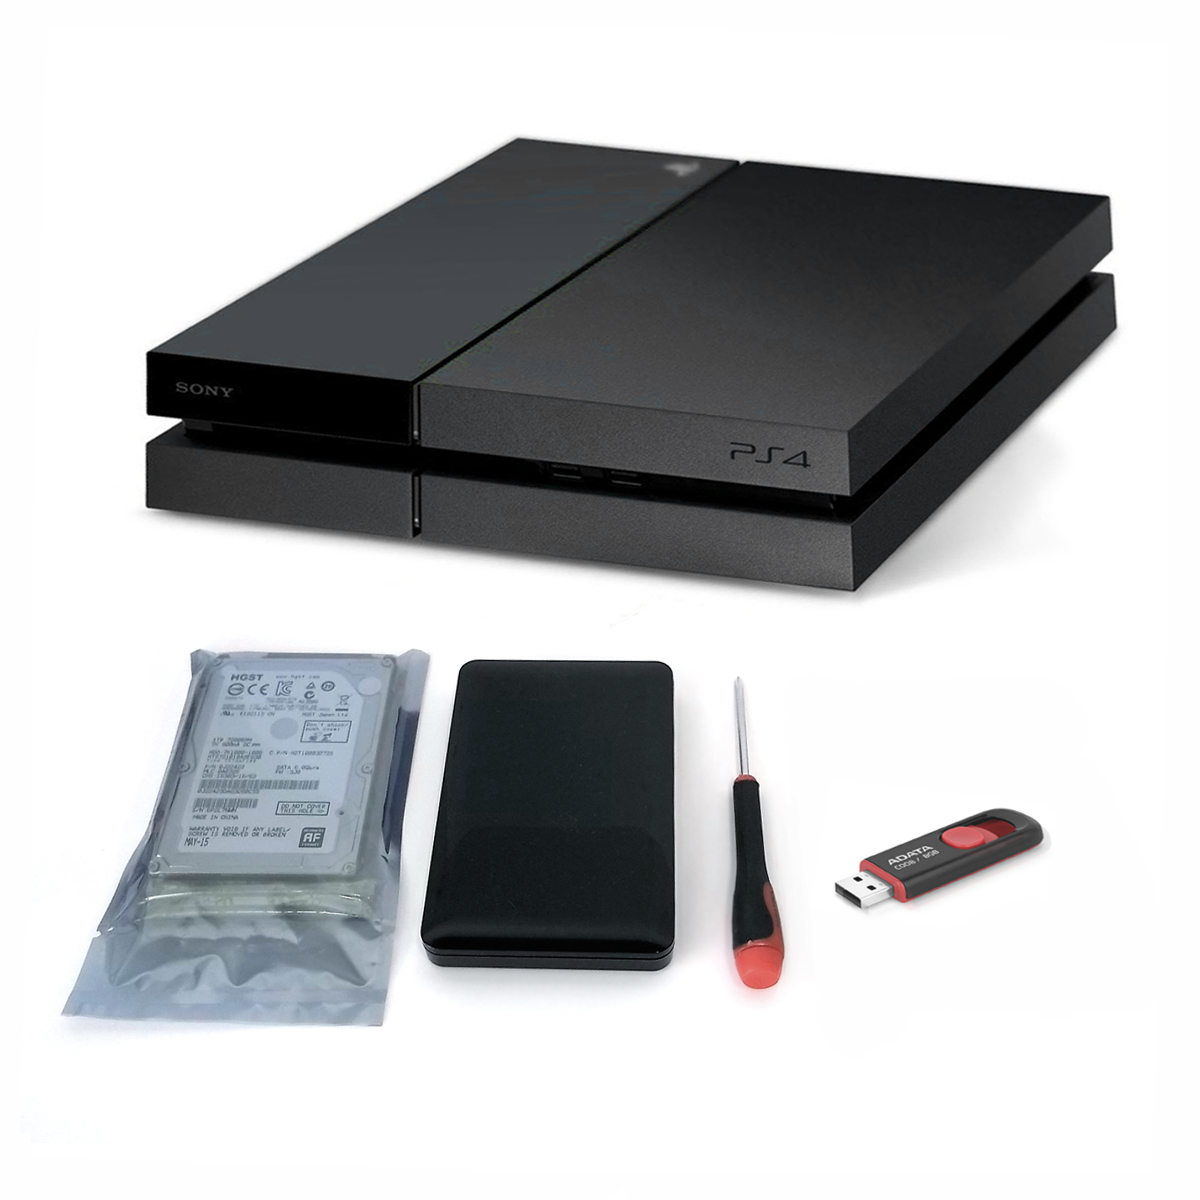 Falde tilbage venskab lave mad Oyen Digital: Oyen Digital 2TB 5400RPM Hard Drive Upgrade Kit - Sony PlayStation  4 (PS4)